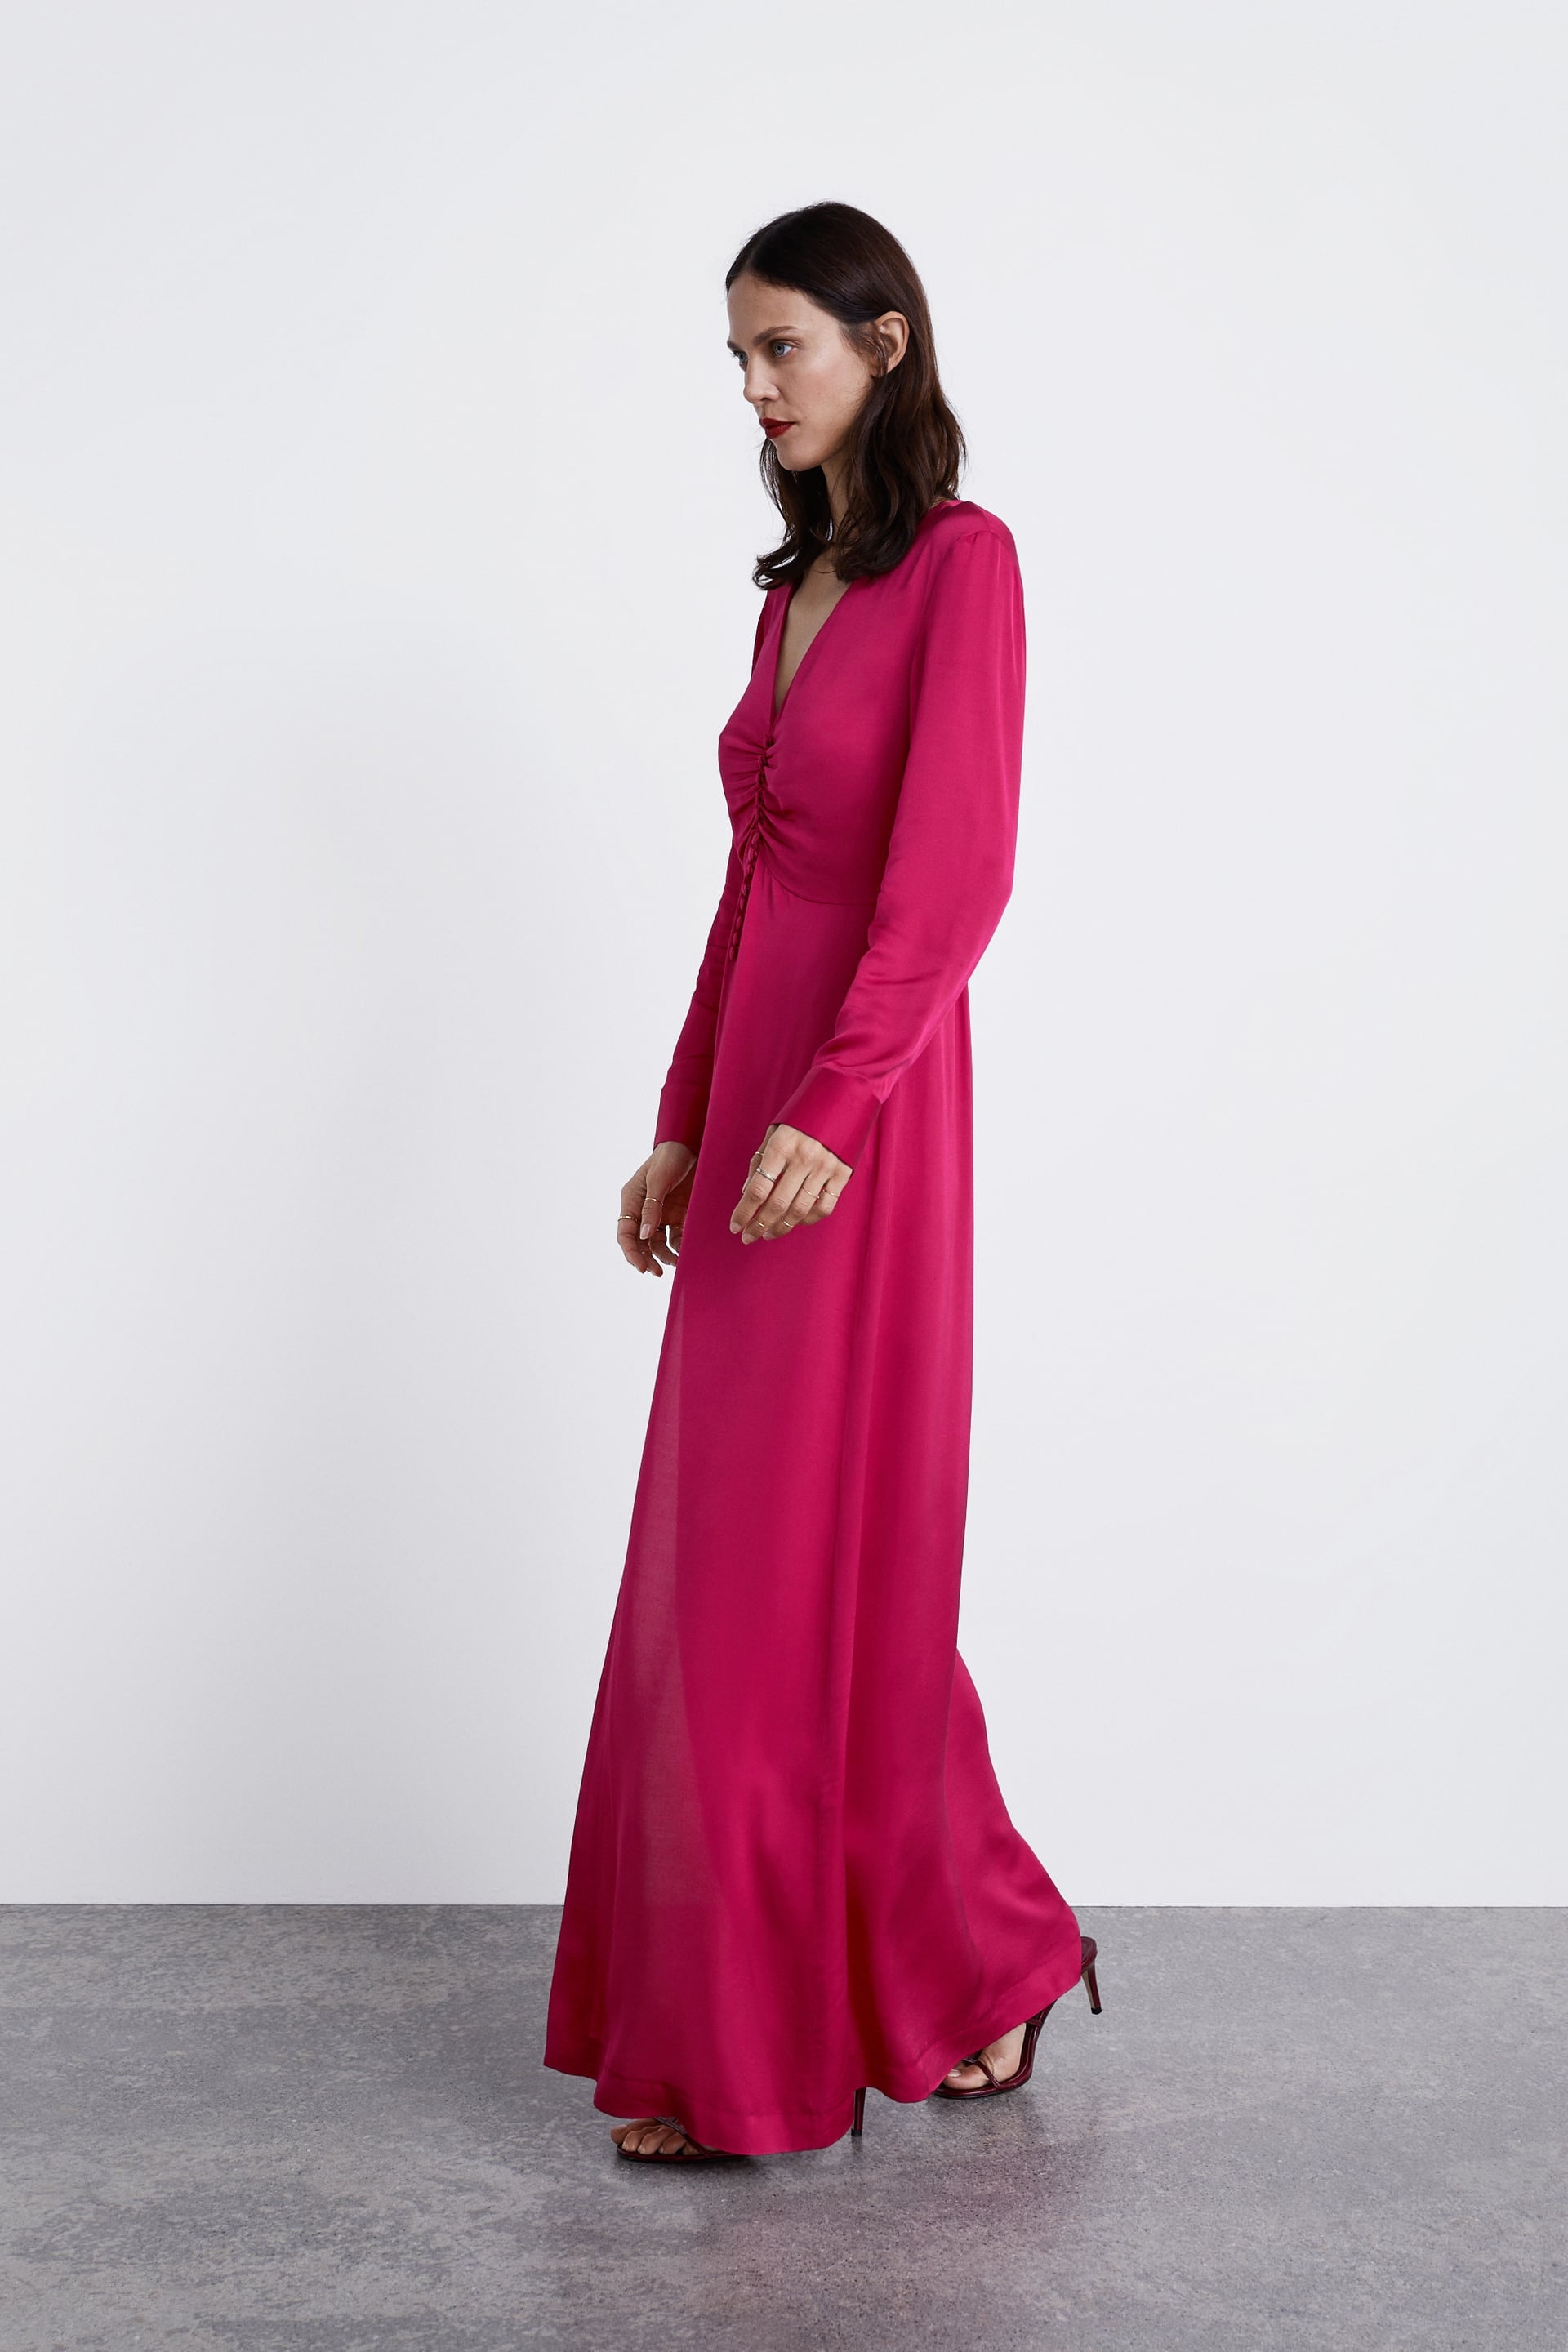 Zara Long Pink Dress | Don't Think 